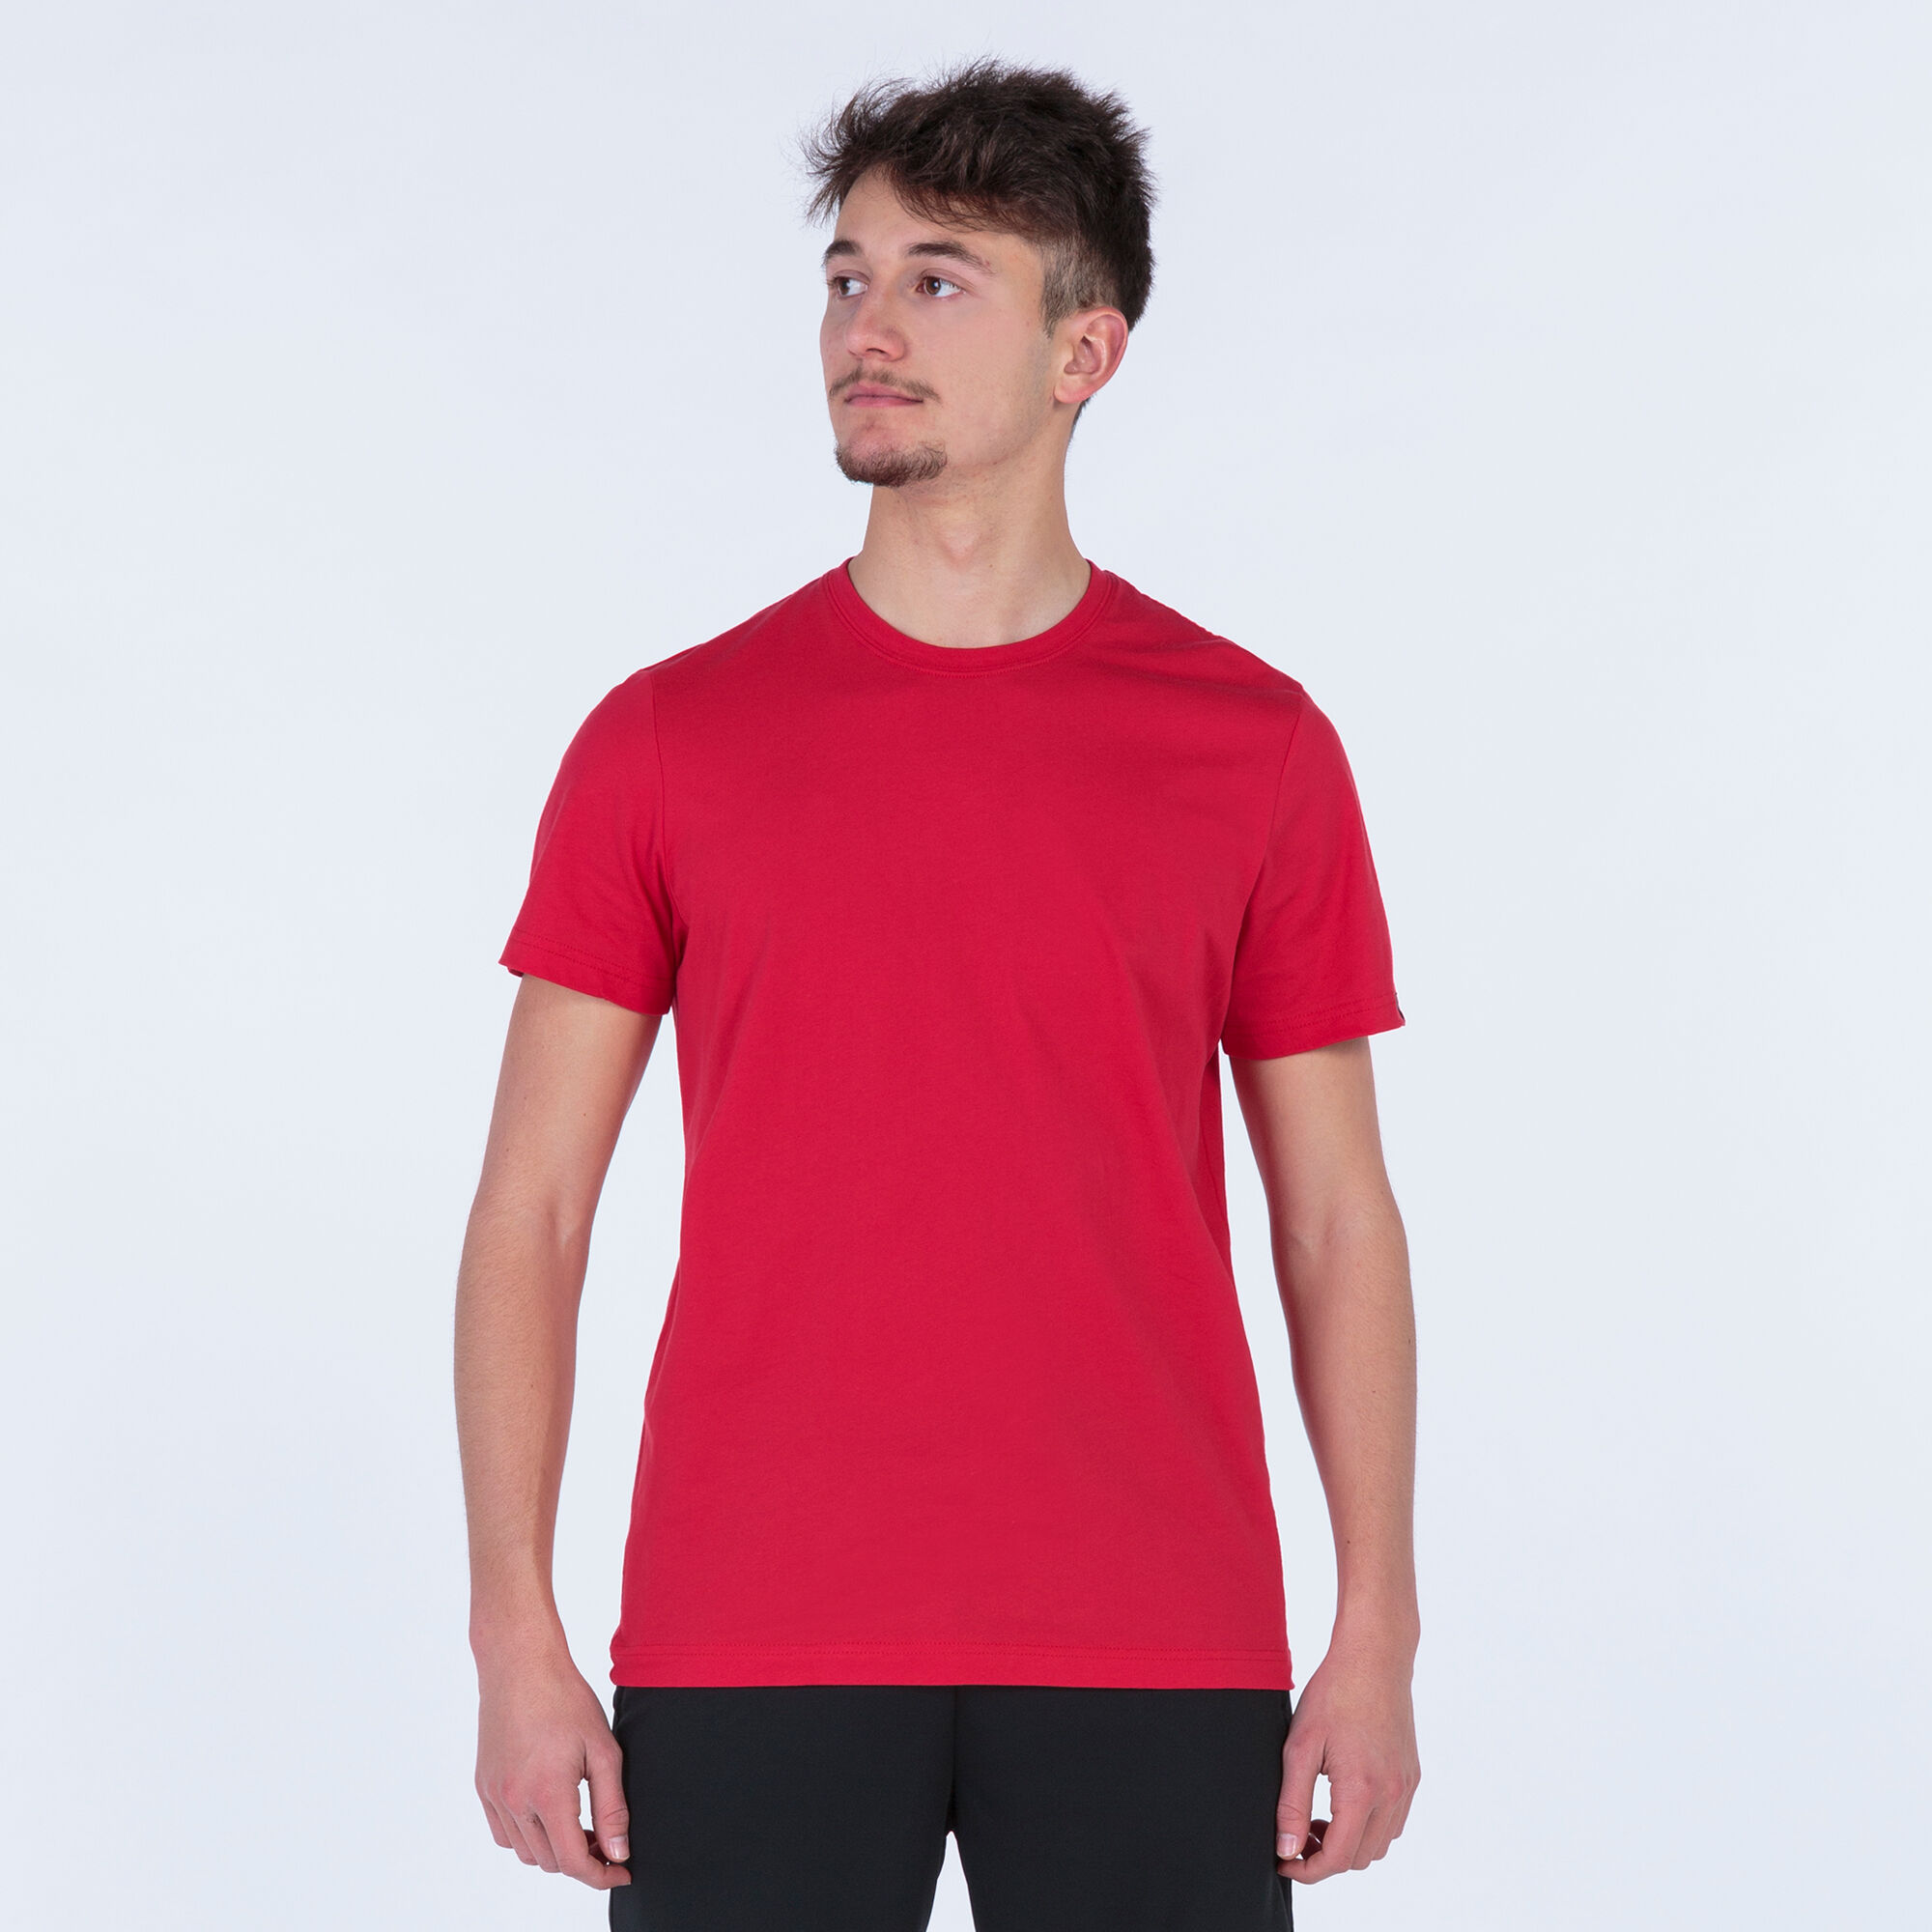 Camiseta manga corta hombre Desert rojo